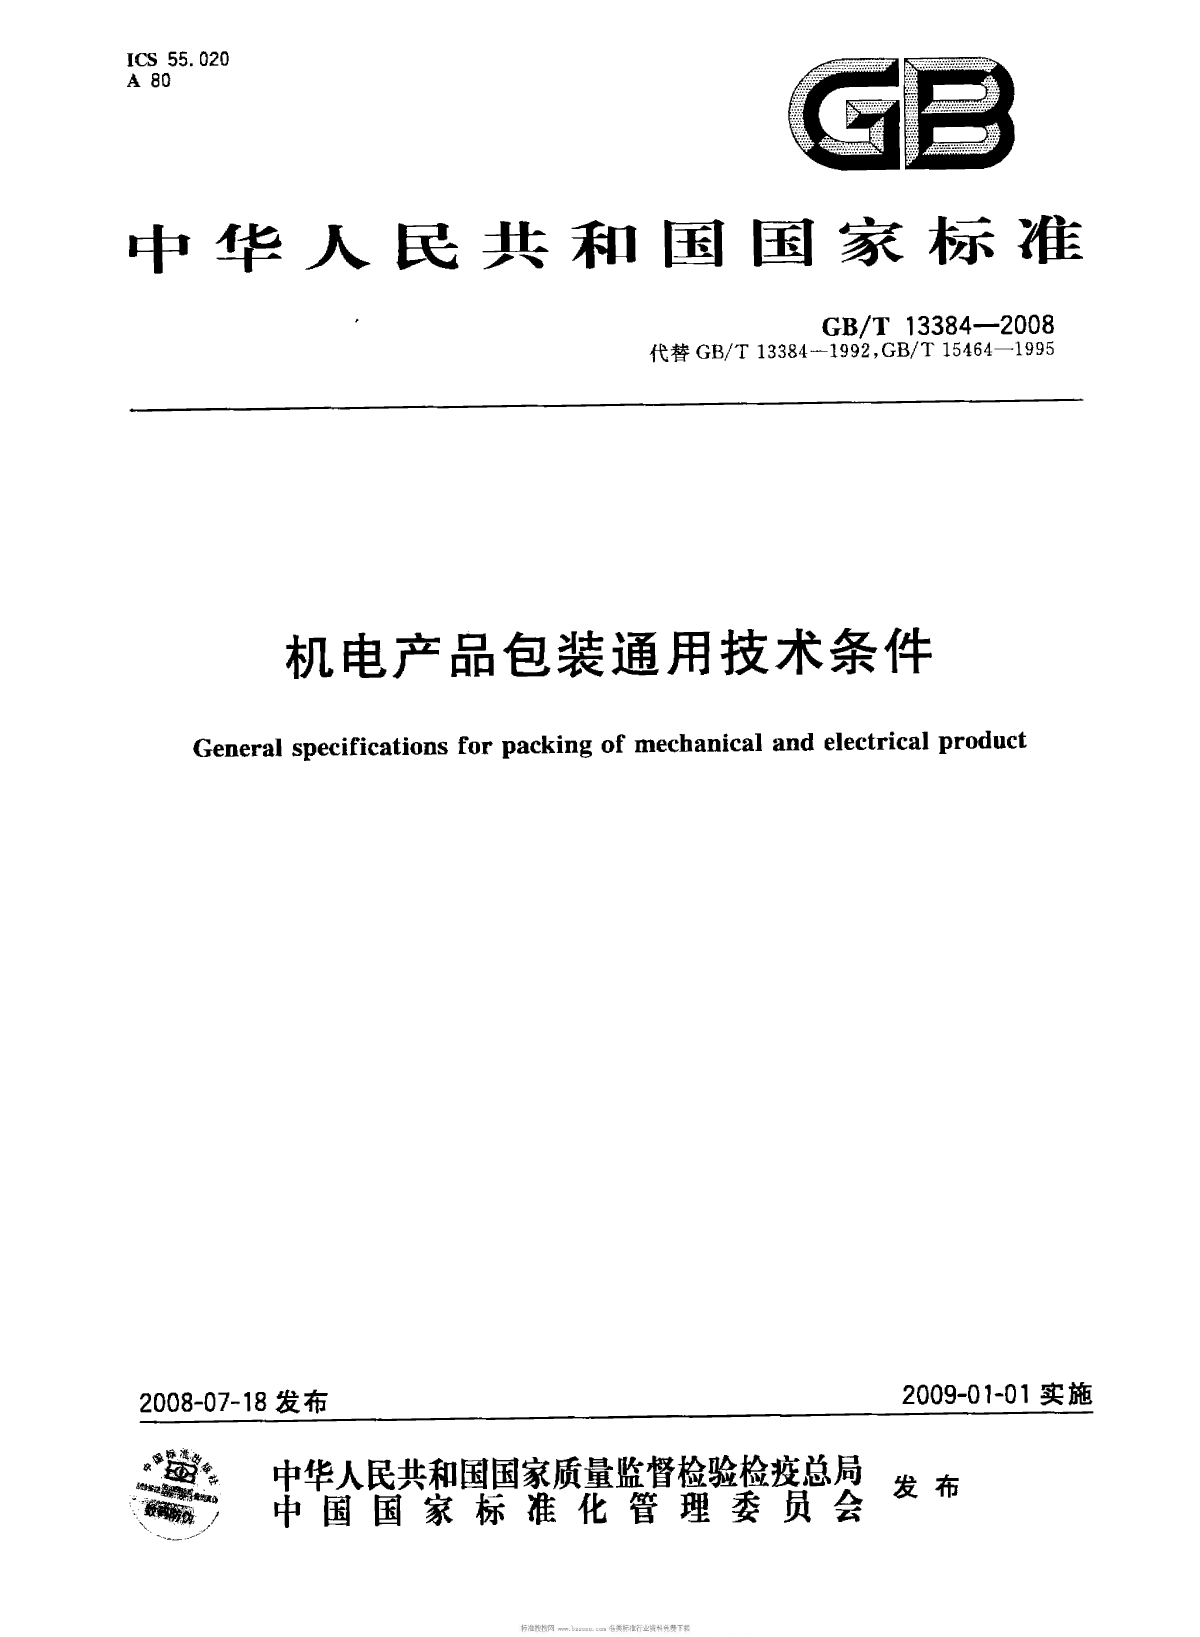 GBT 13384-2008 机电产品包装通用技术条件.pdf